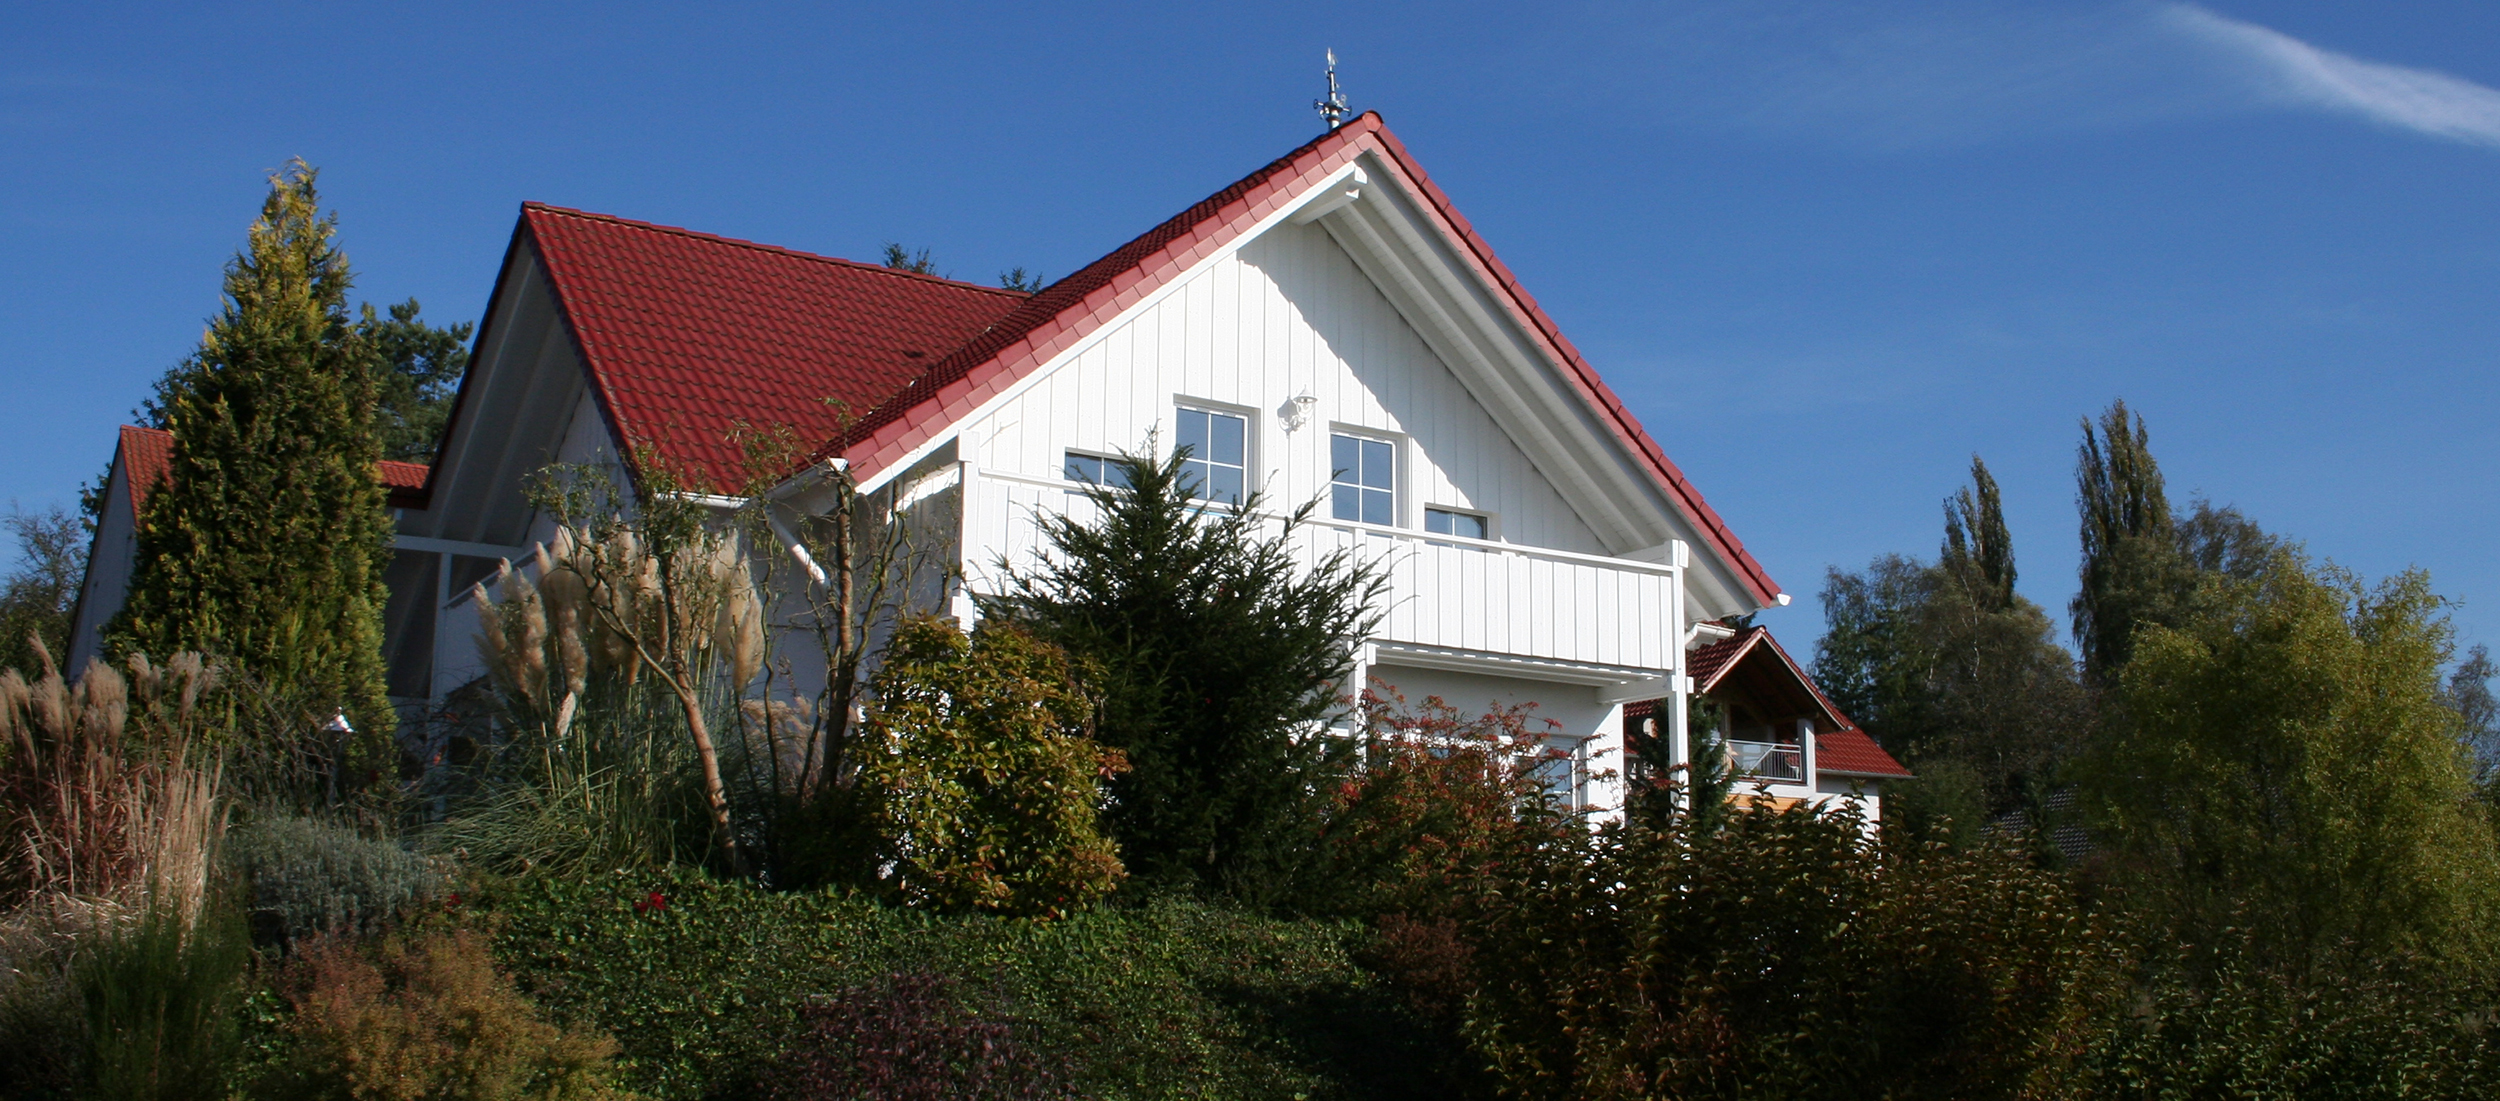 Holzrahmenhaus